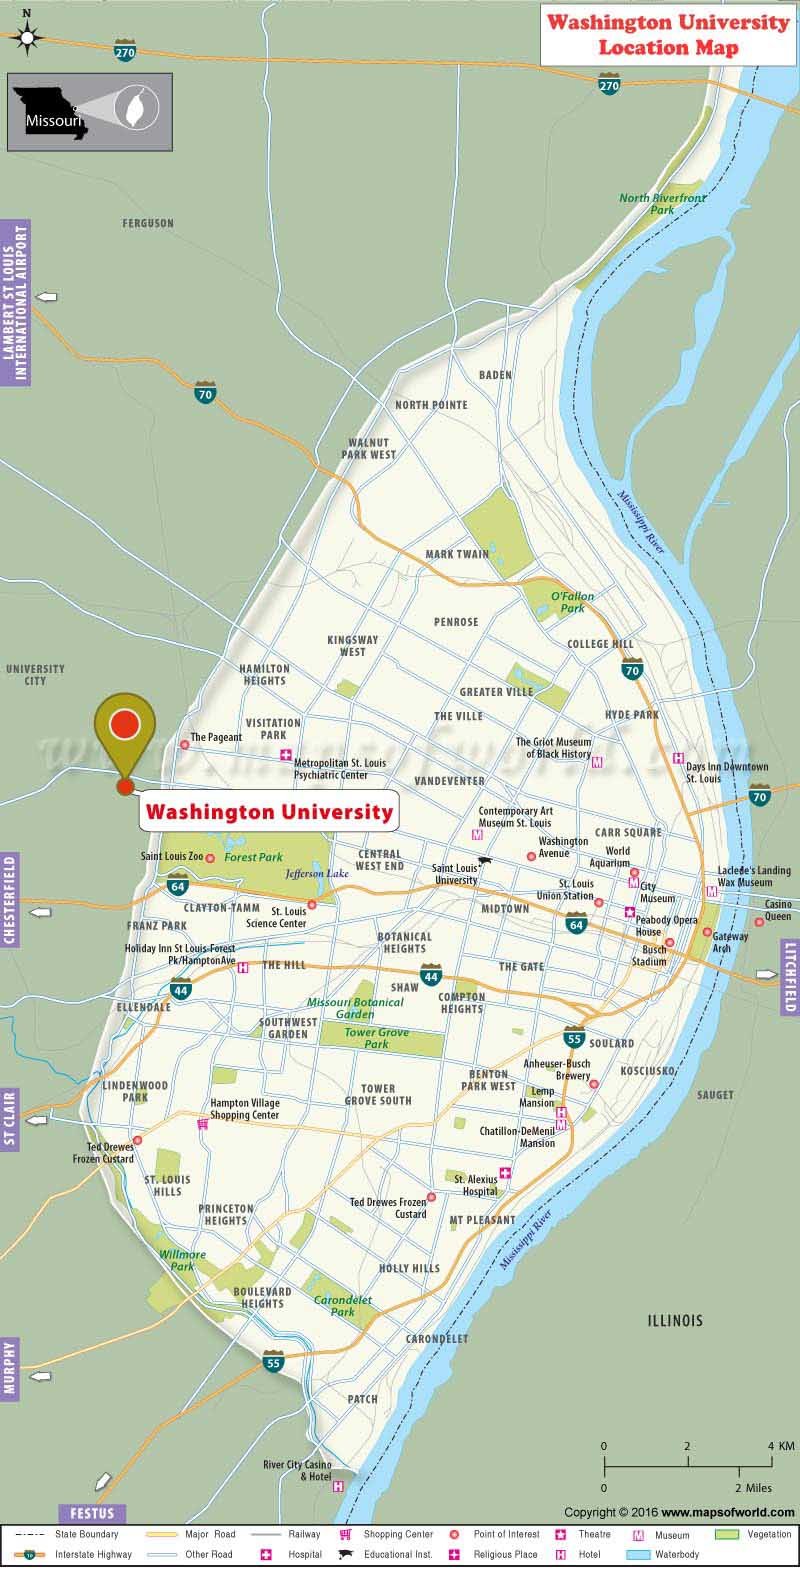 Washington University, St. Louis, Missouri